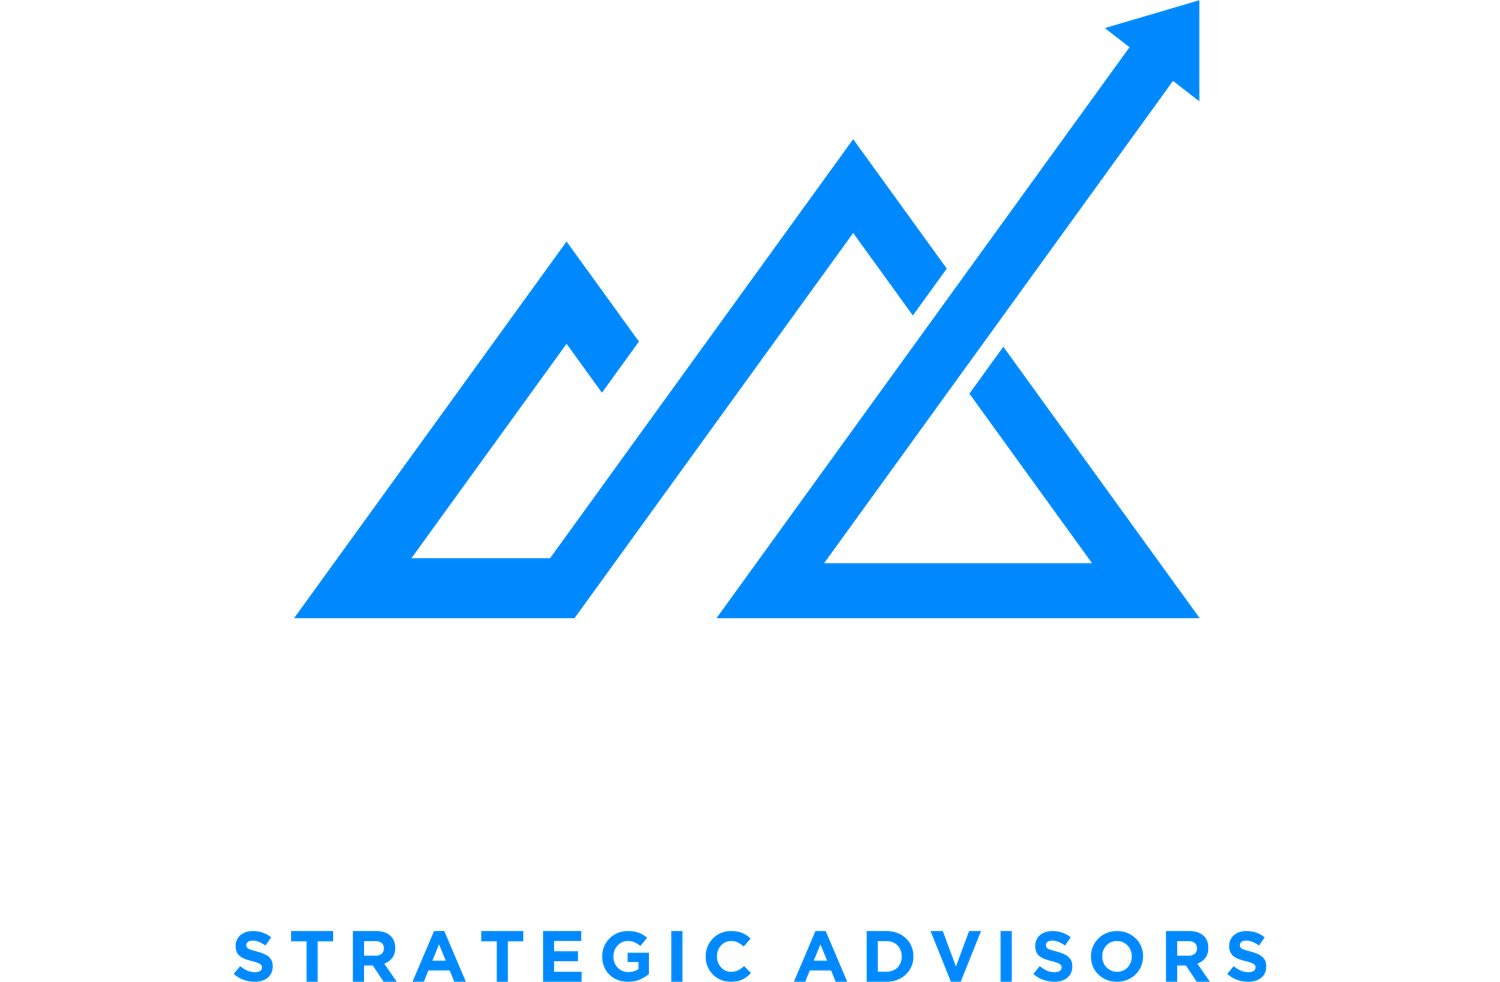 Solomon Strategic Advisors